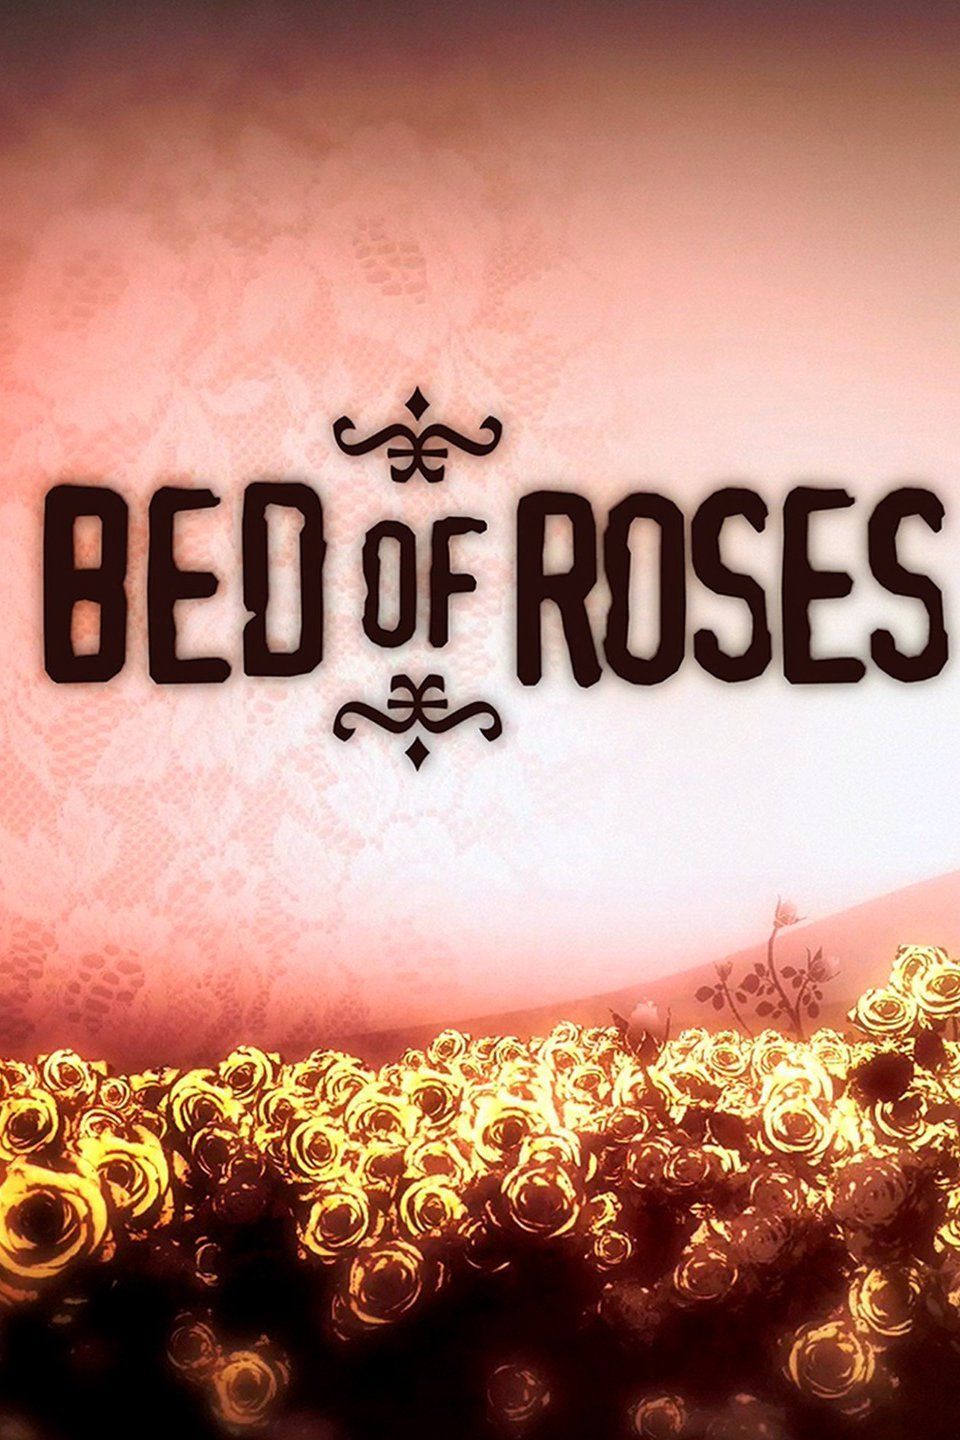 Bed of Roses ne zaman